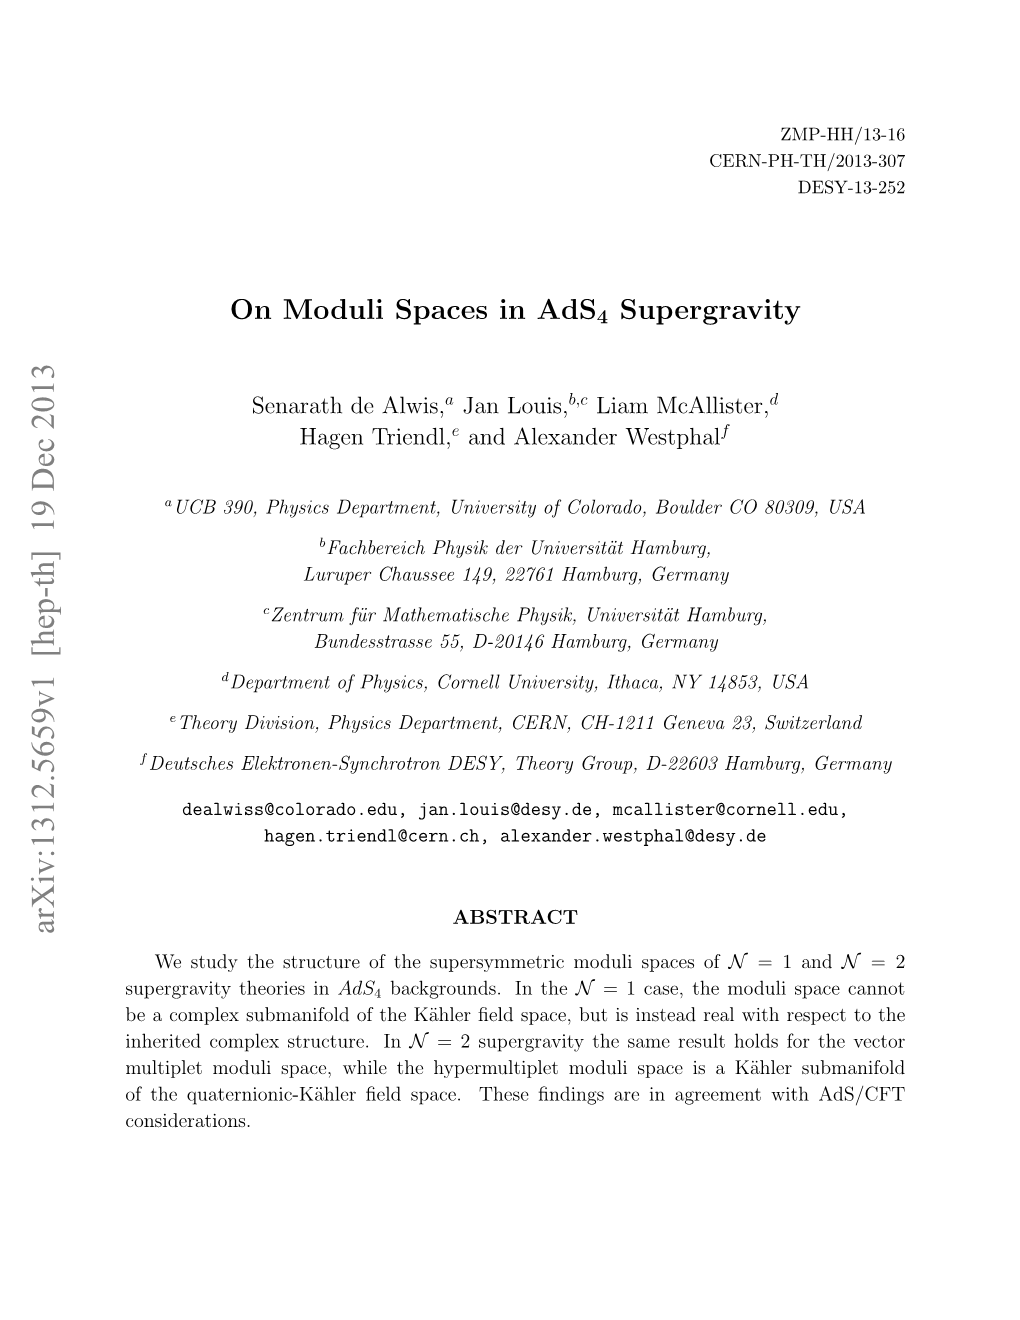 On Moduli Spaces in Ads {Sub 4} Supergravity